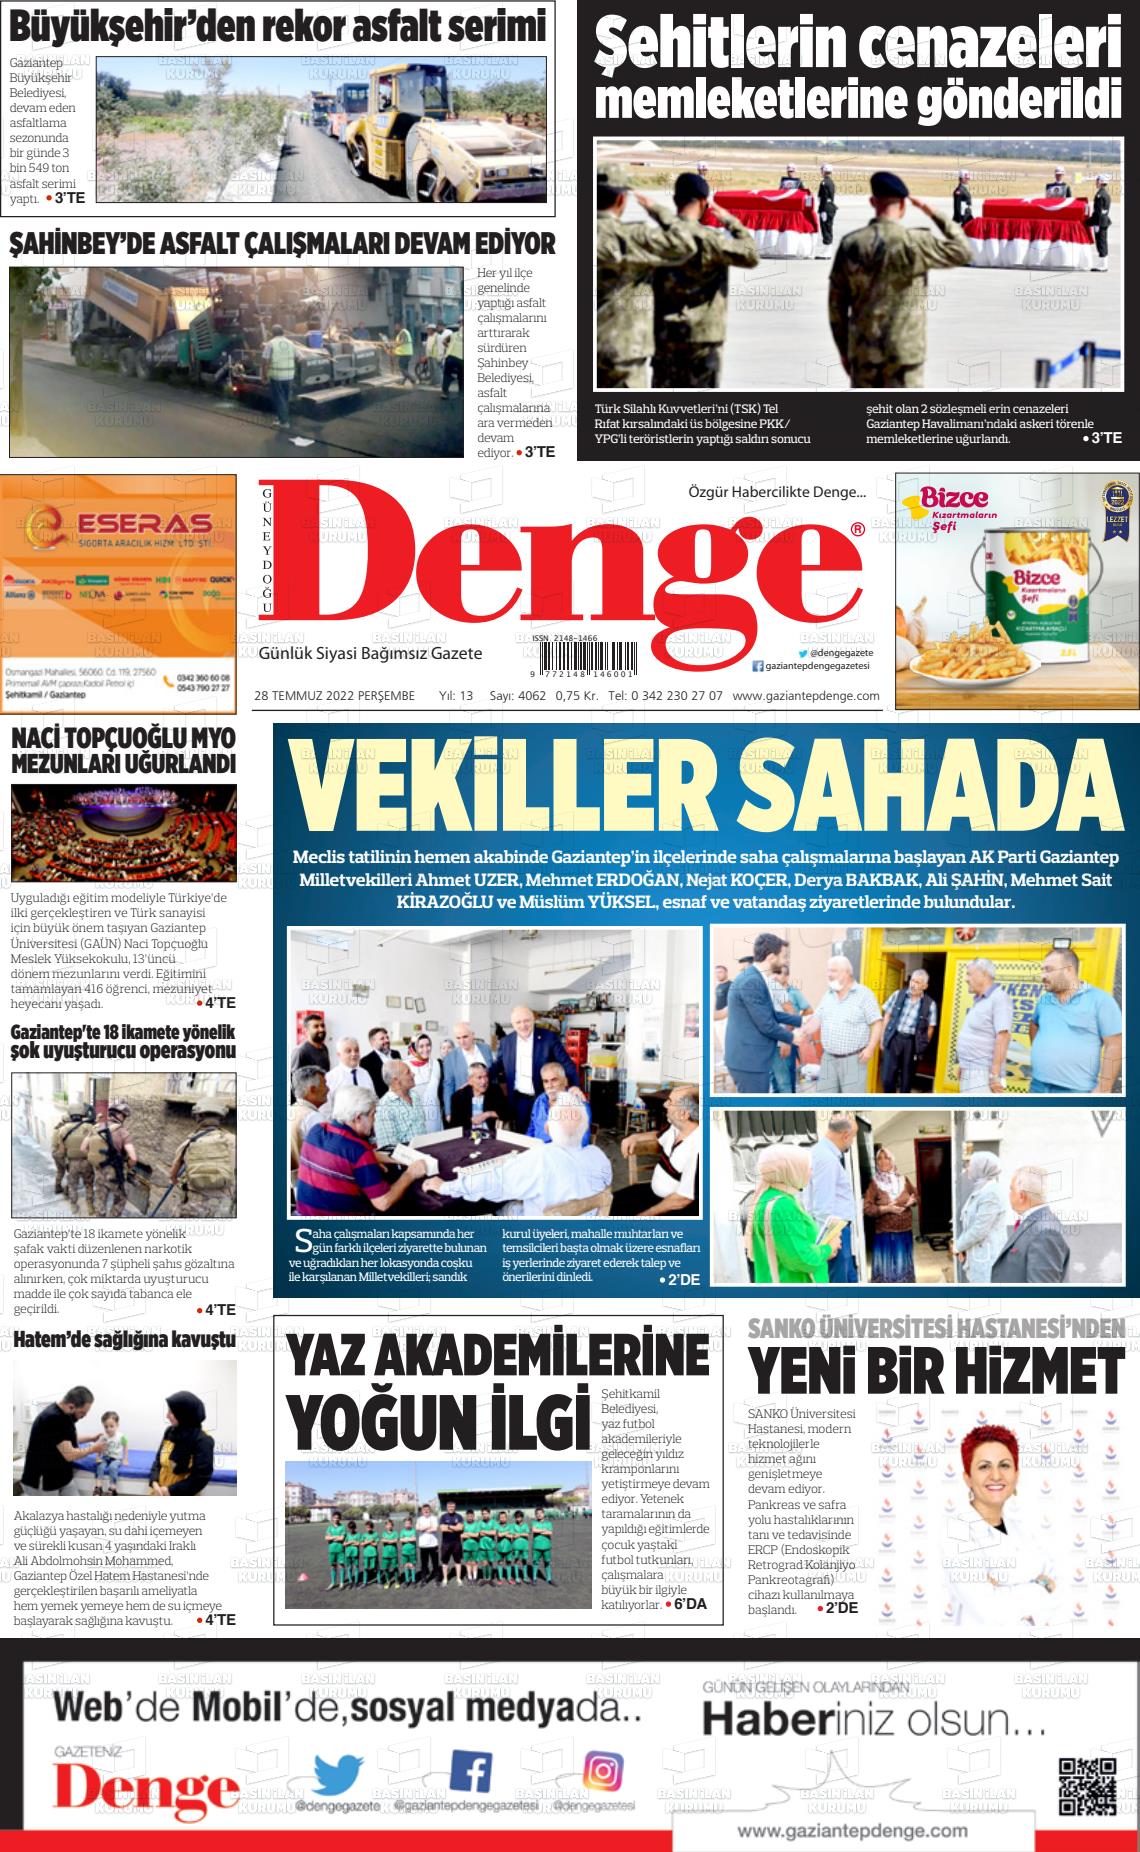 Temmuz Tarihli Gaziantep Denge Gazete Man Etleri